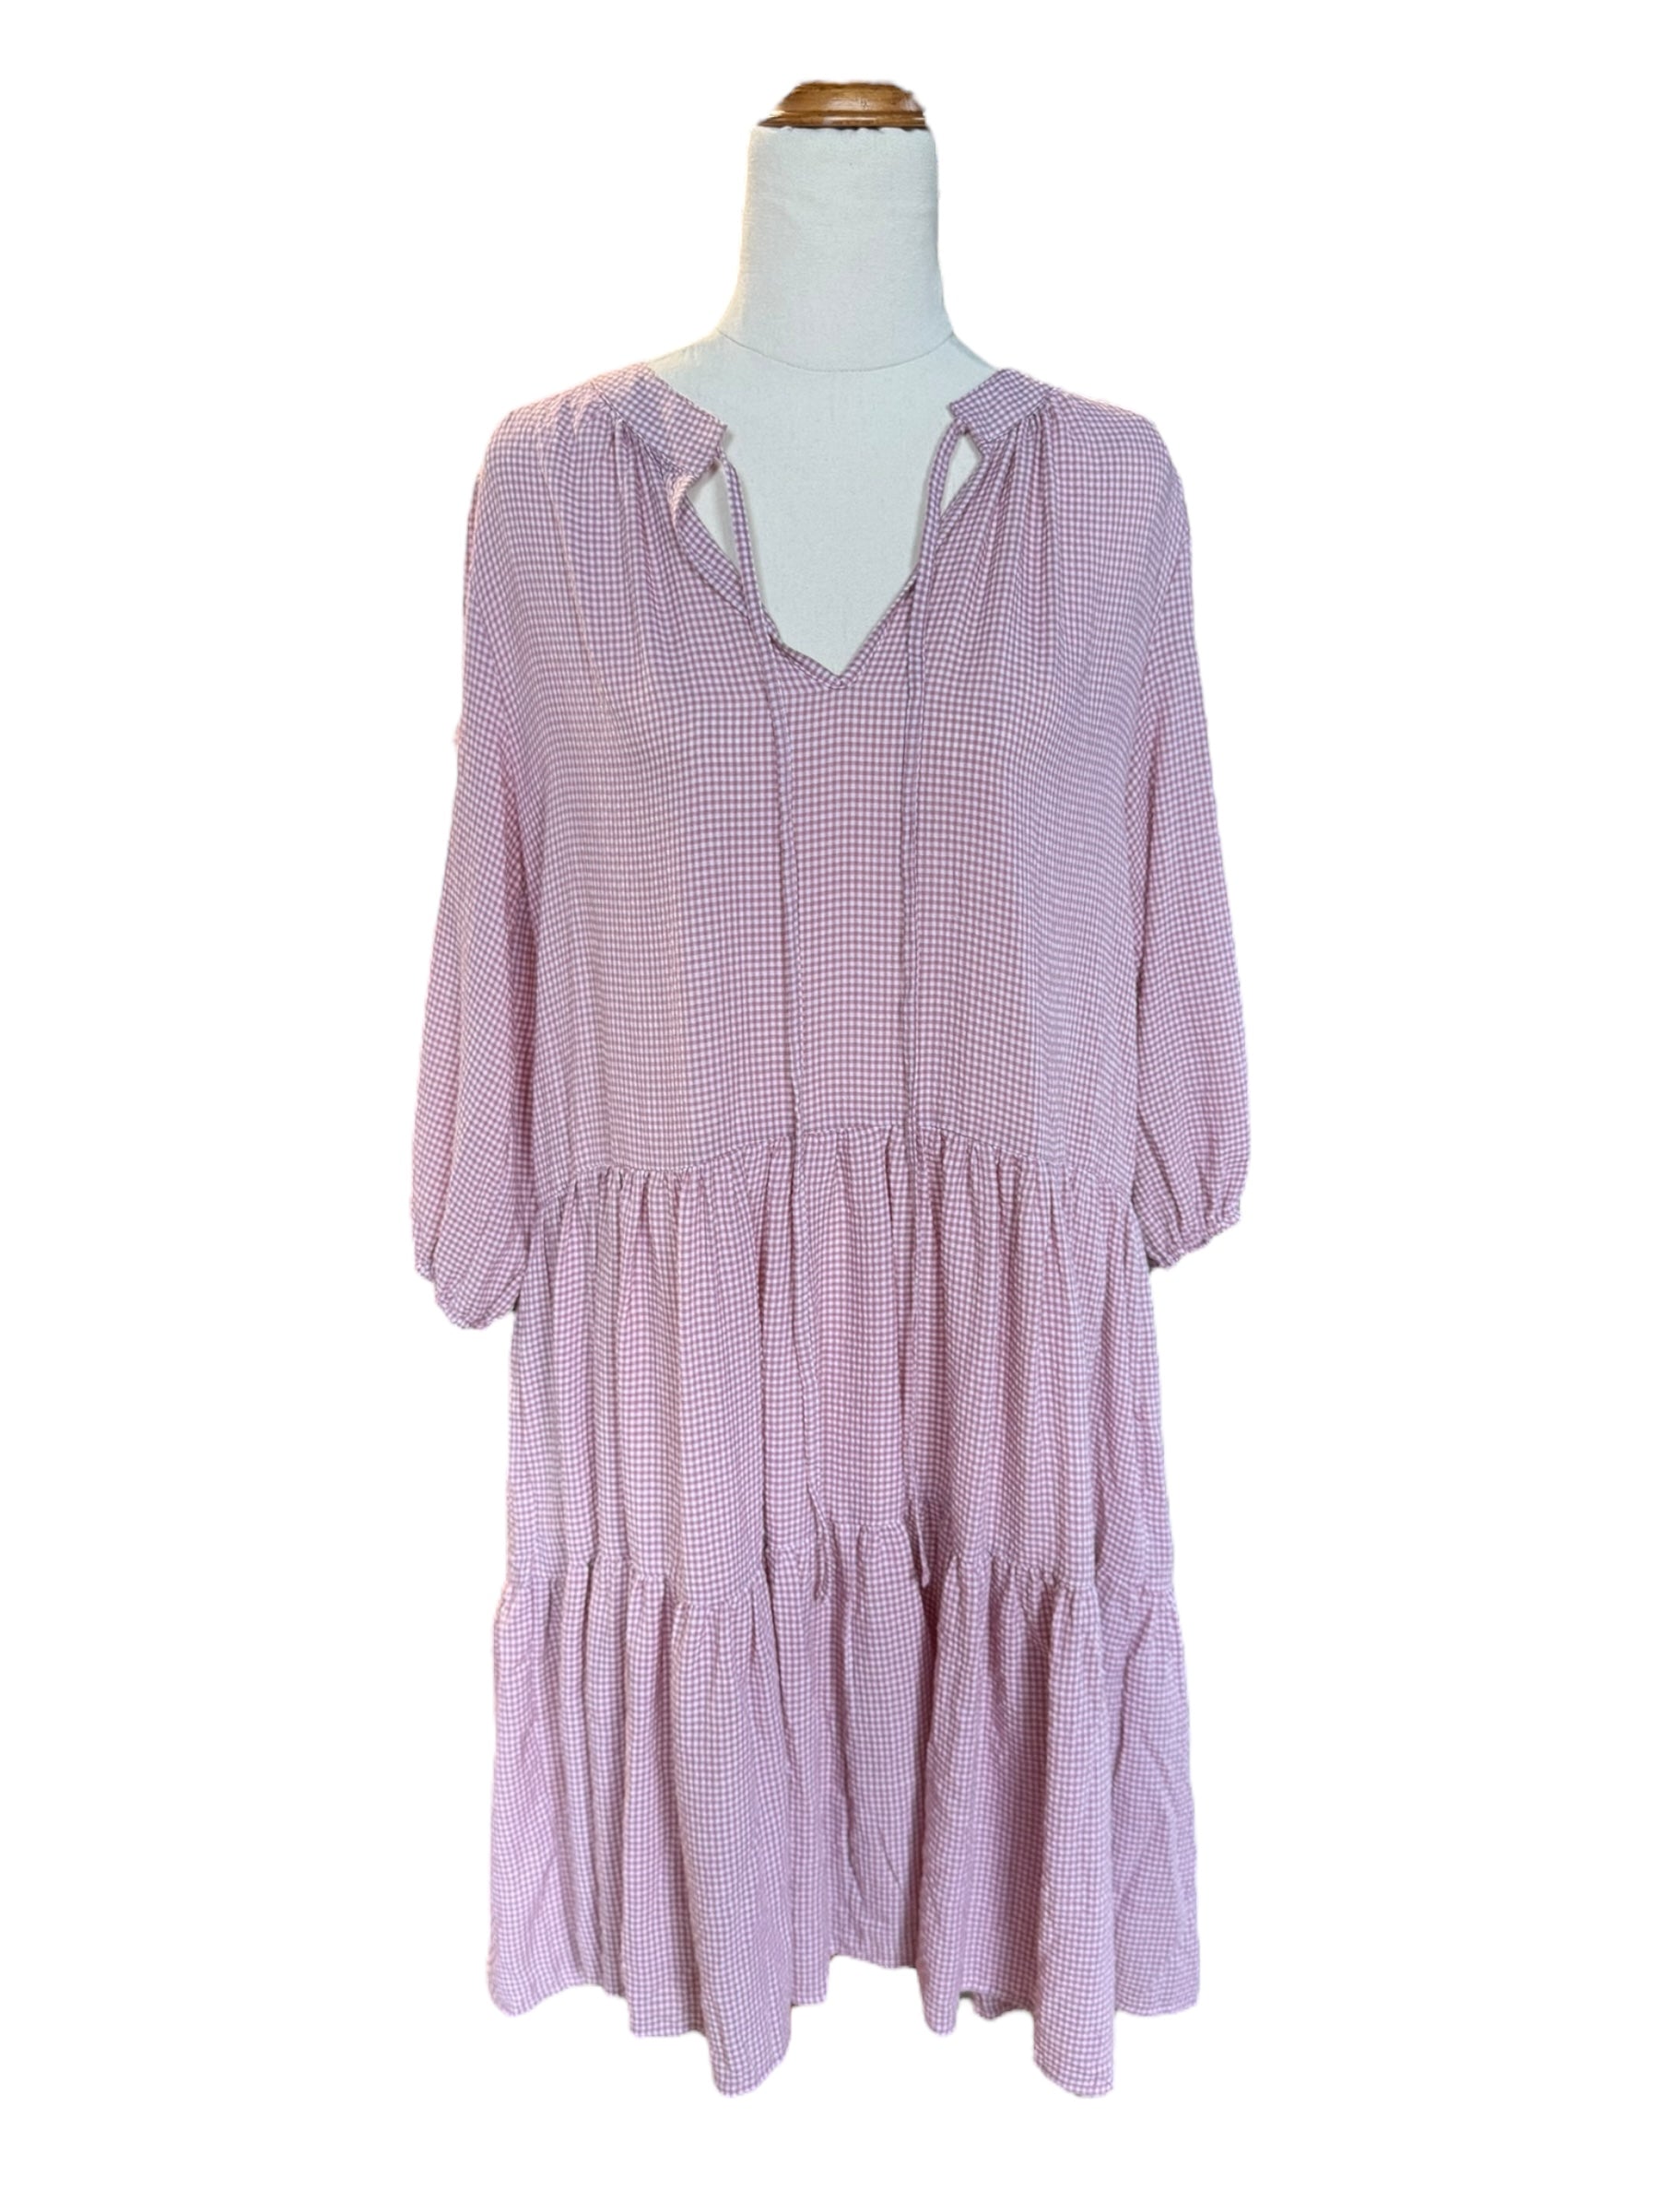 'Melanie' Gingham Dress - Dusty Pink